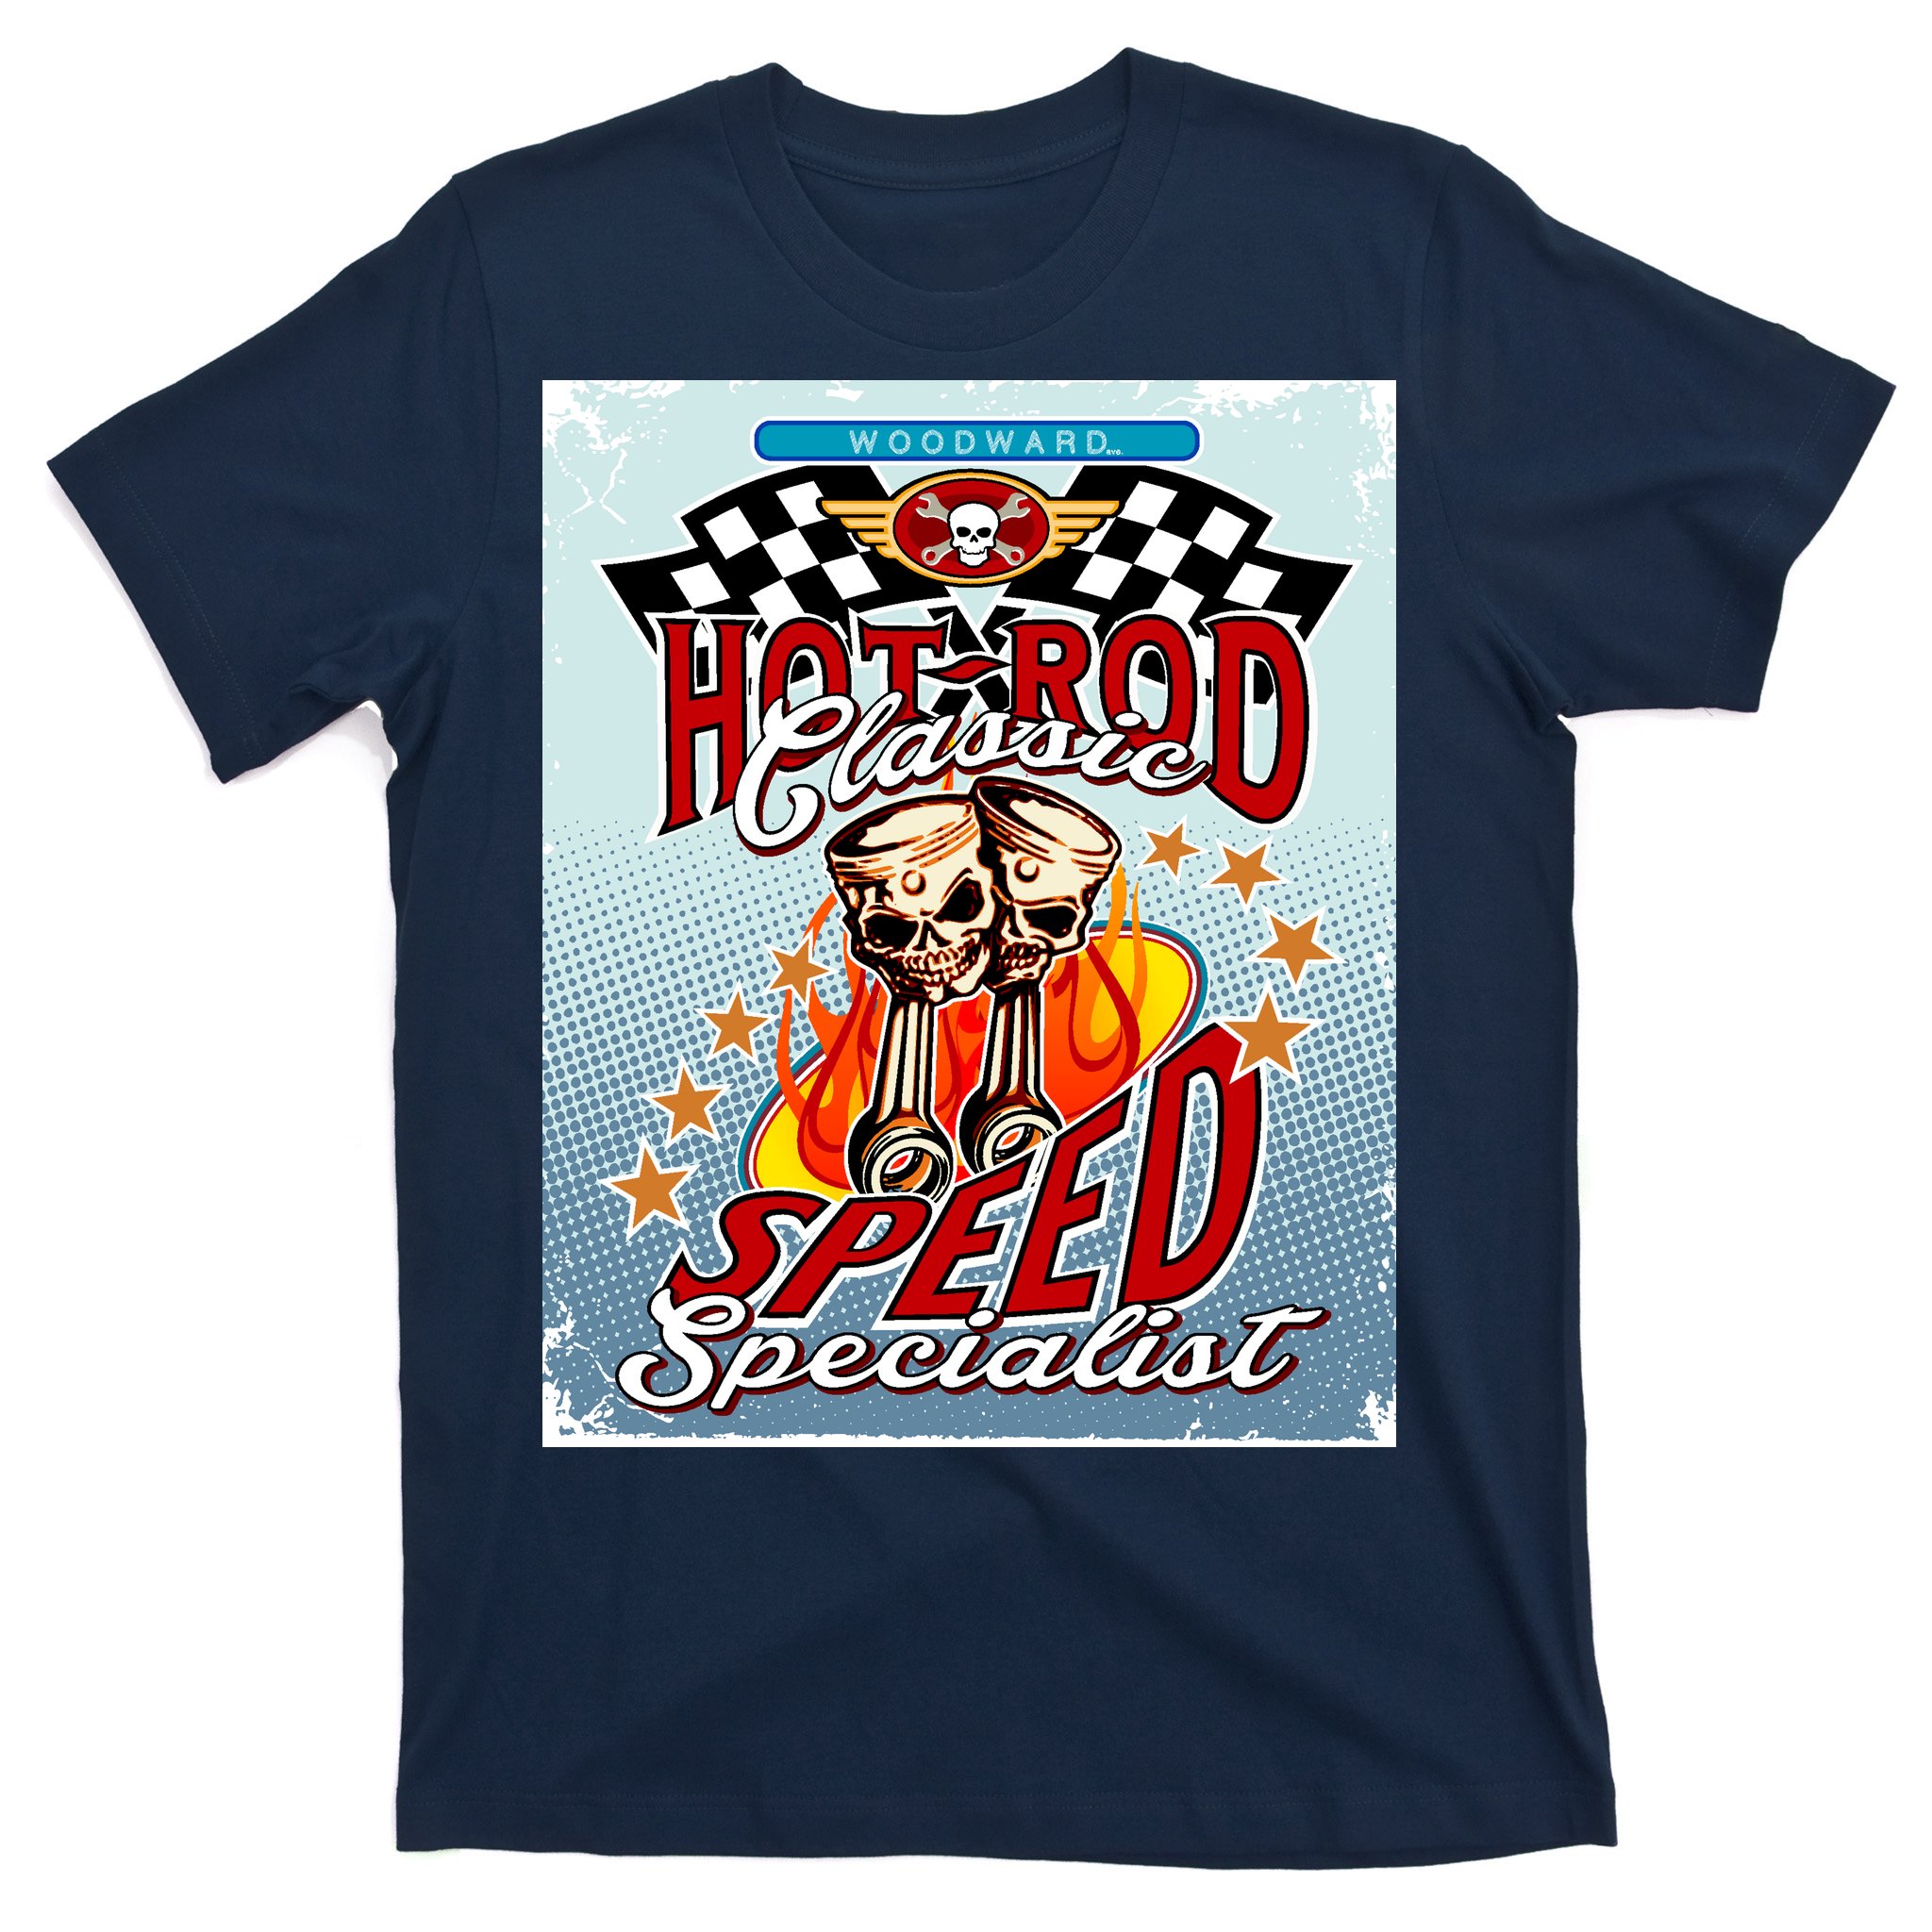 Hot rod shop t shirt Hot rod apparel speed shop t shirt Old school hot rod Coupe shirt car guy shirt Hotrod t shirt One Life Live It